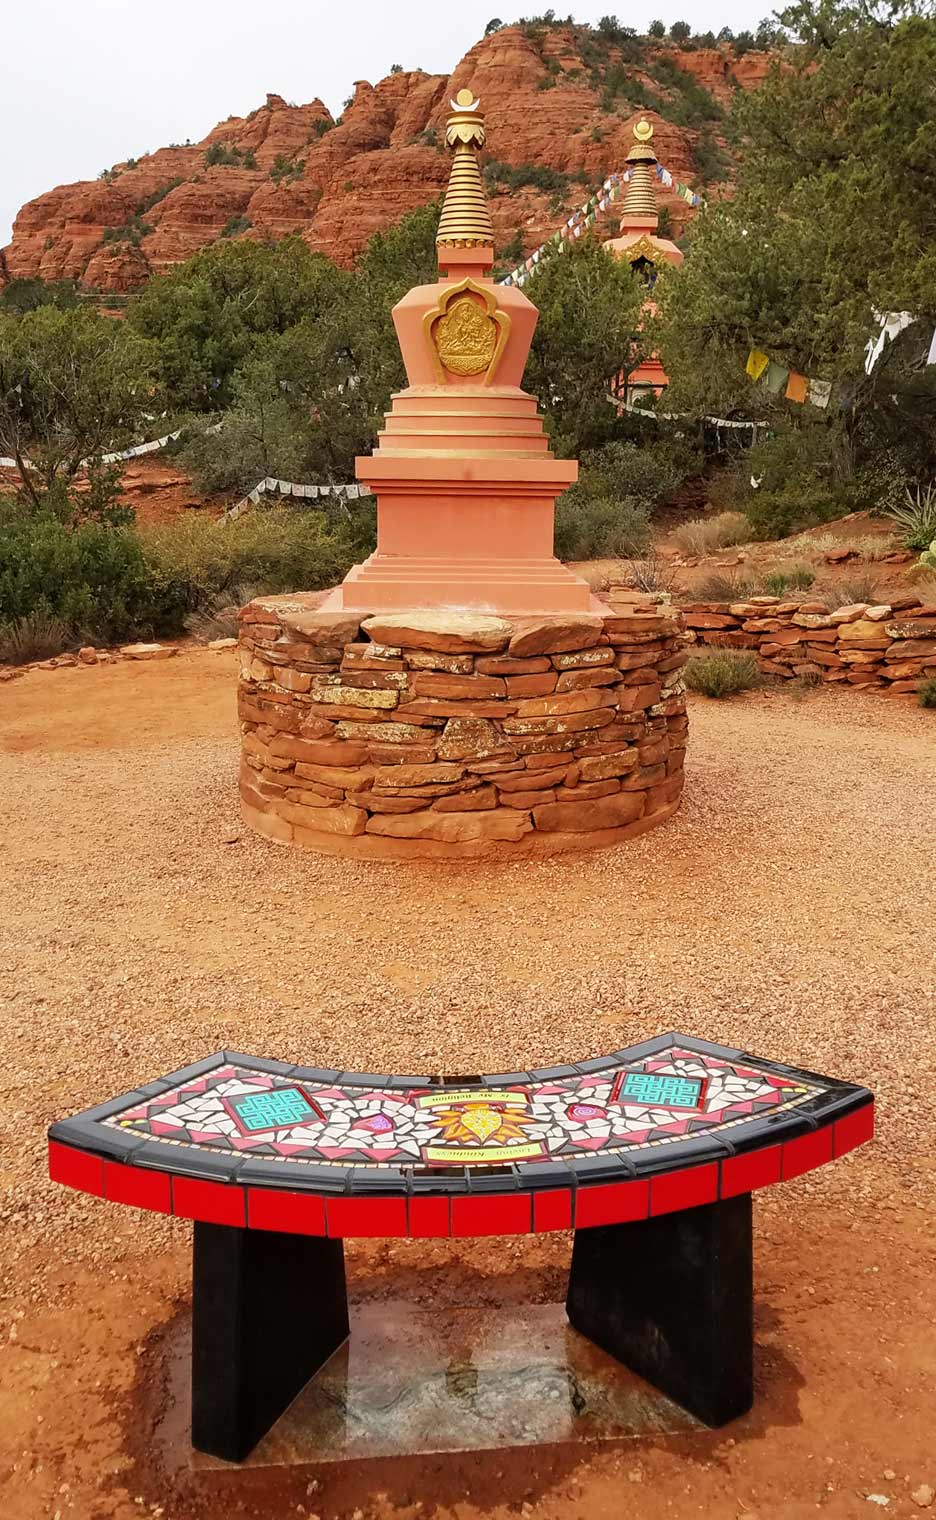 Tara stupa in the foreground and Amitabha stupa in the background in Sedona, Arizona